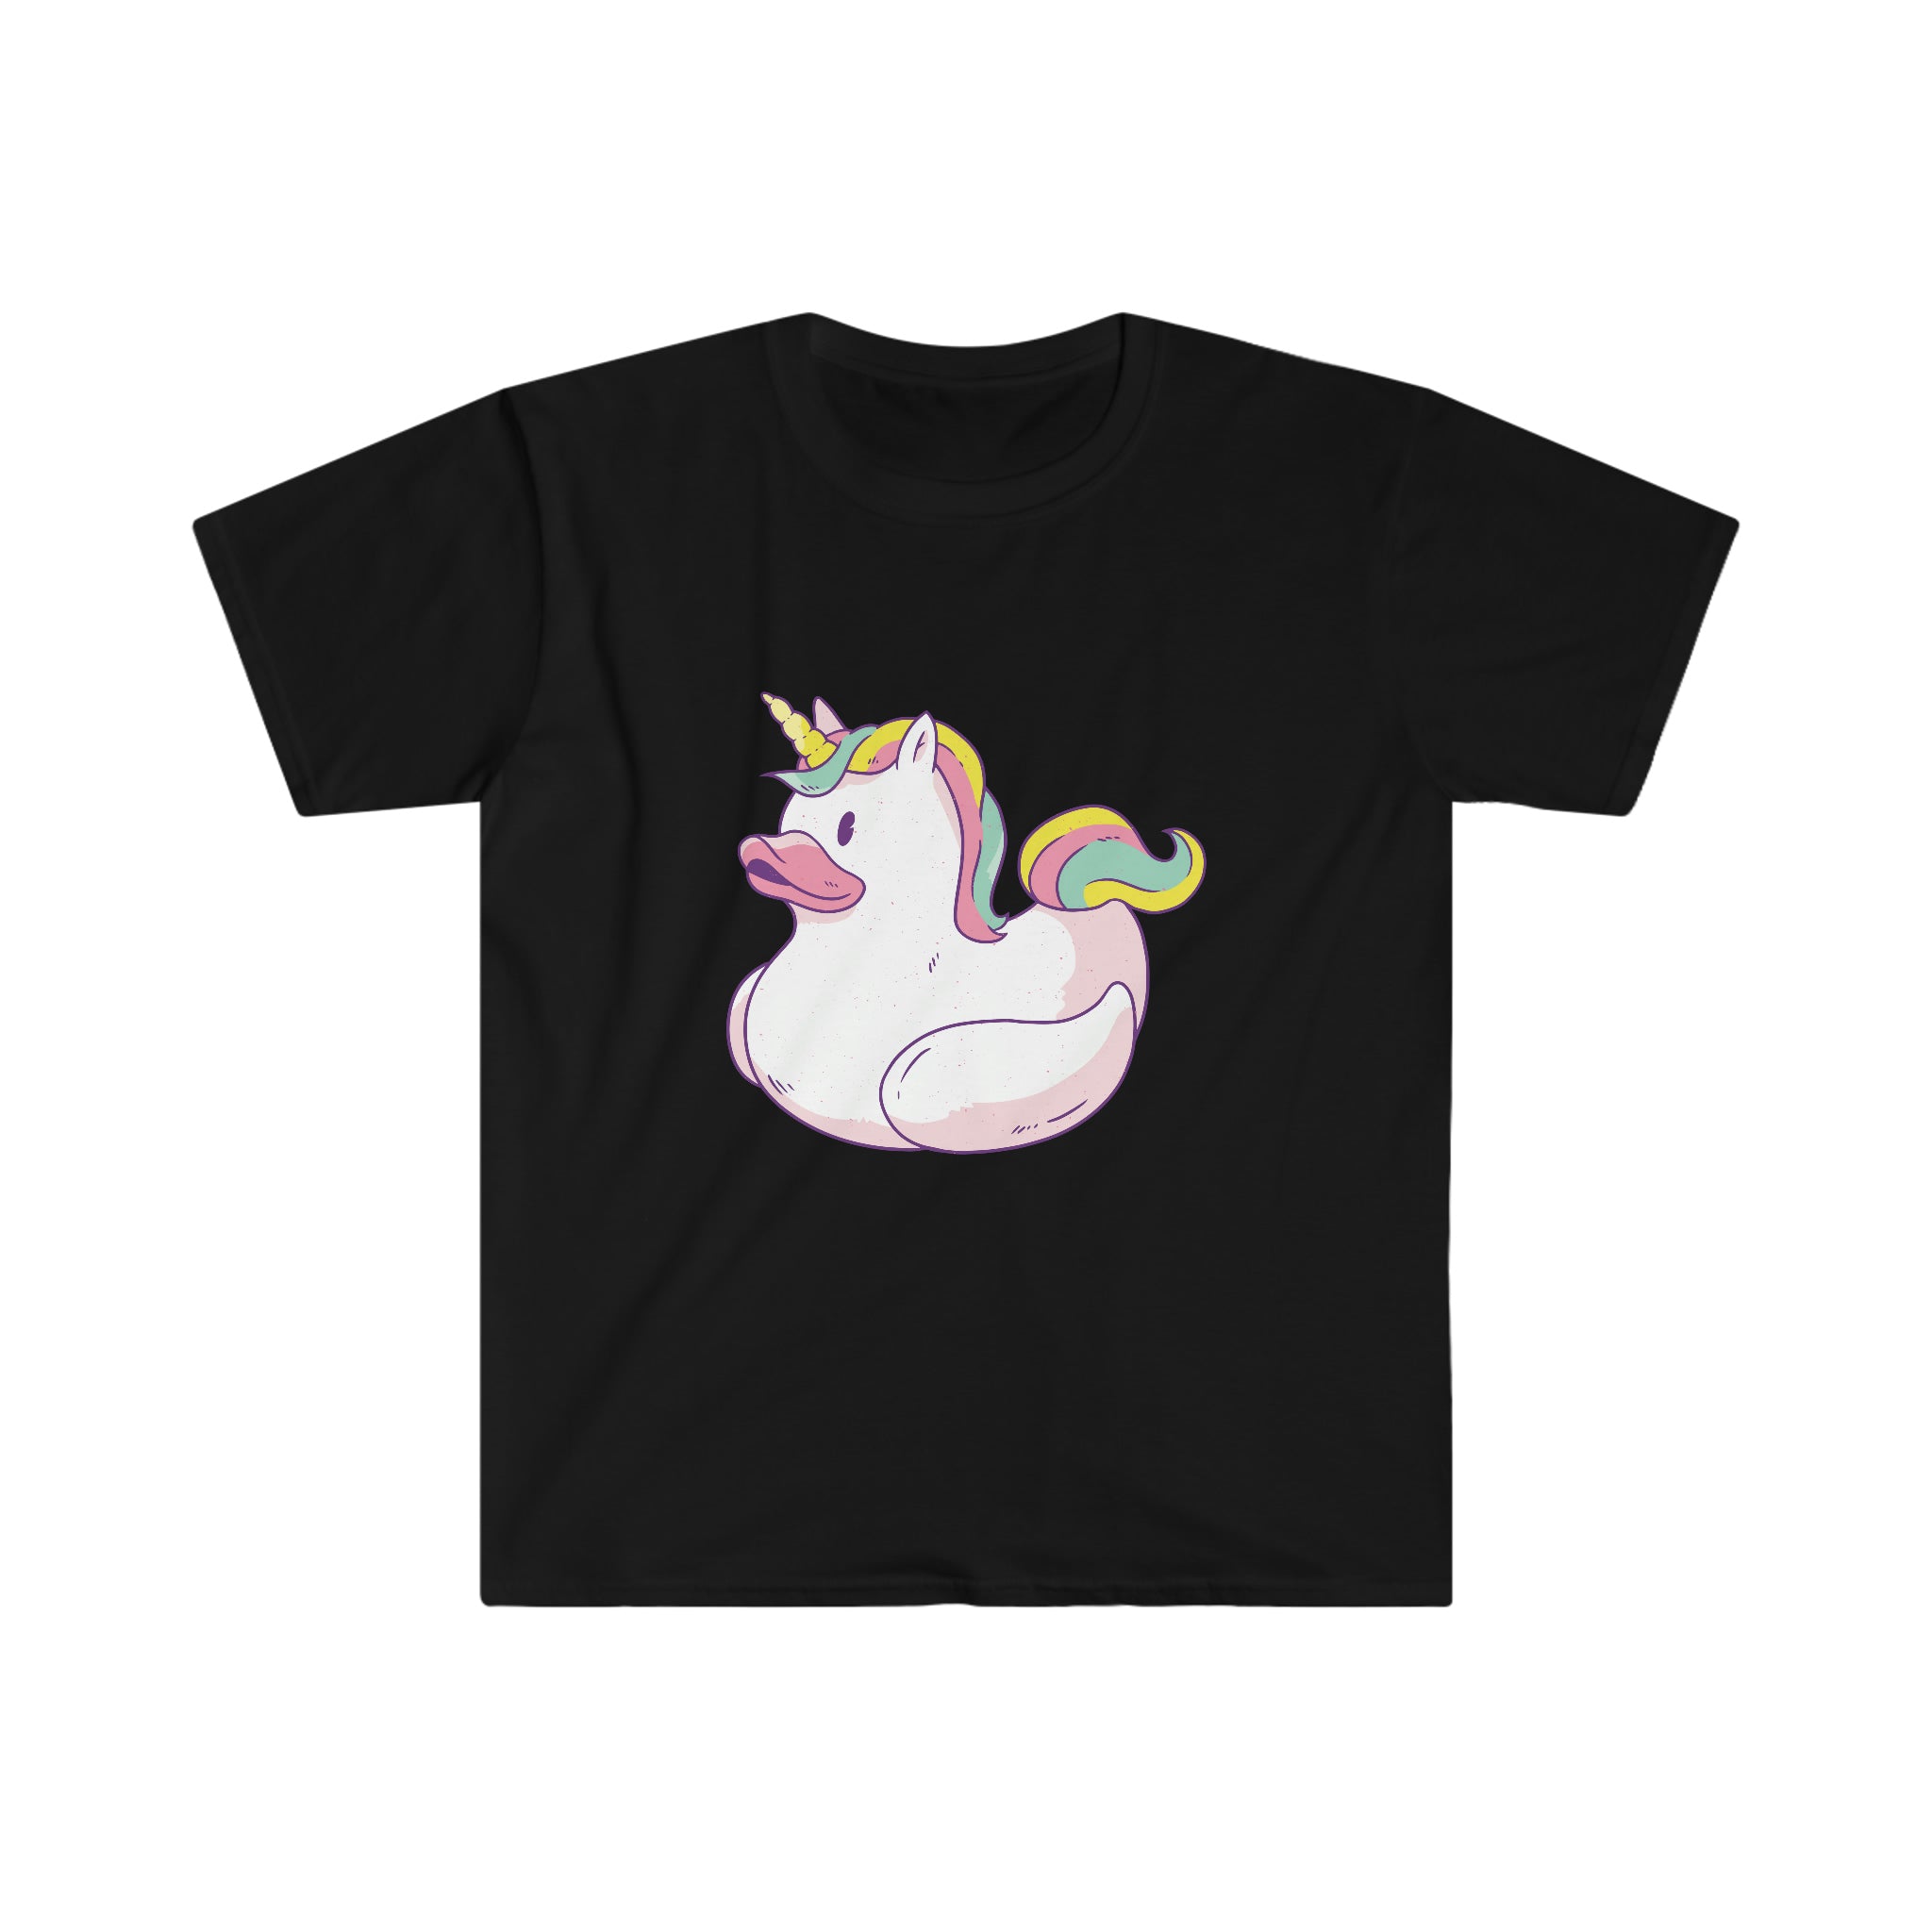 A Unicorn Duck T-Shirt with a unicorn on it.